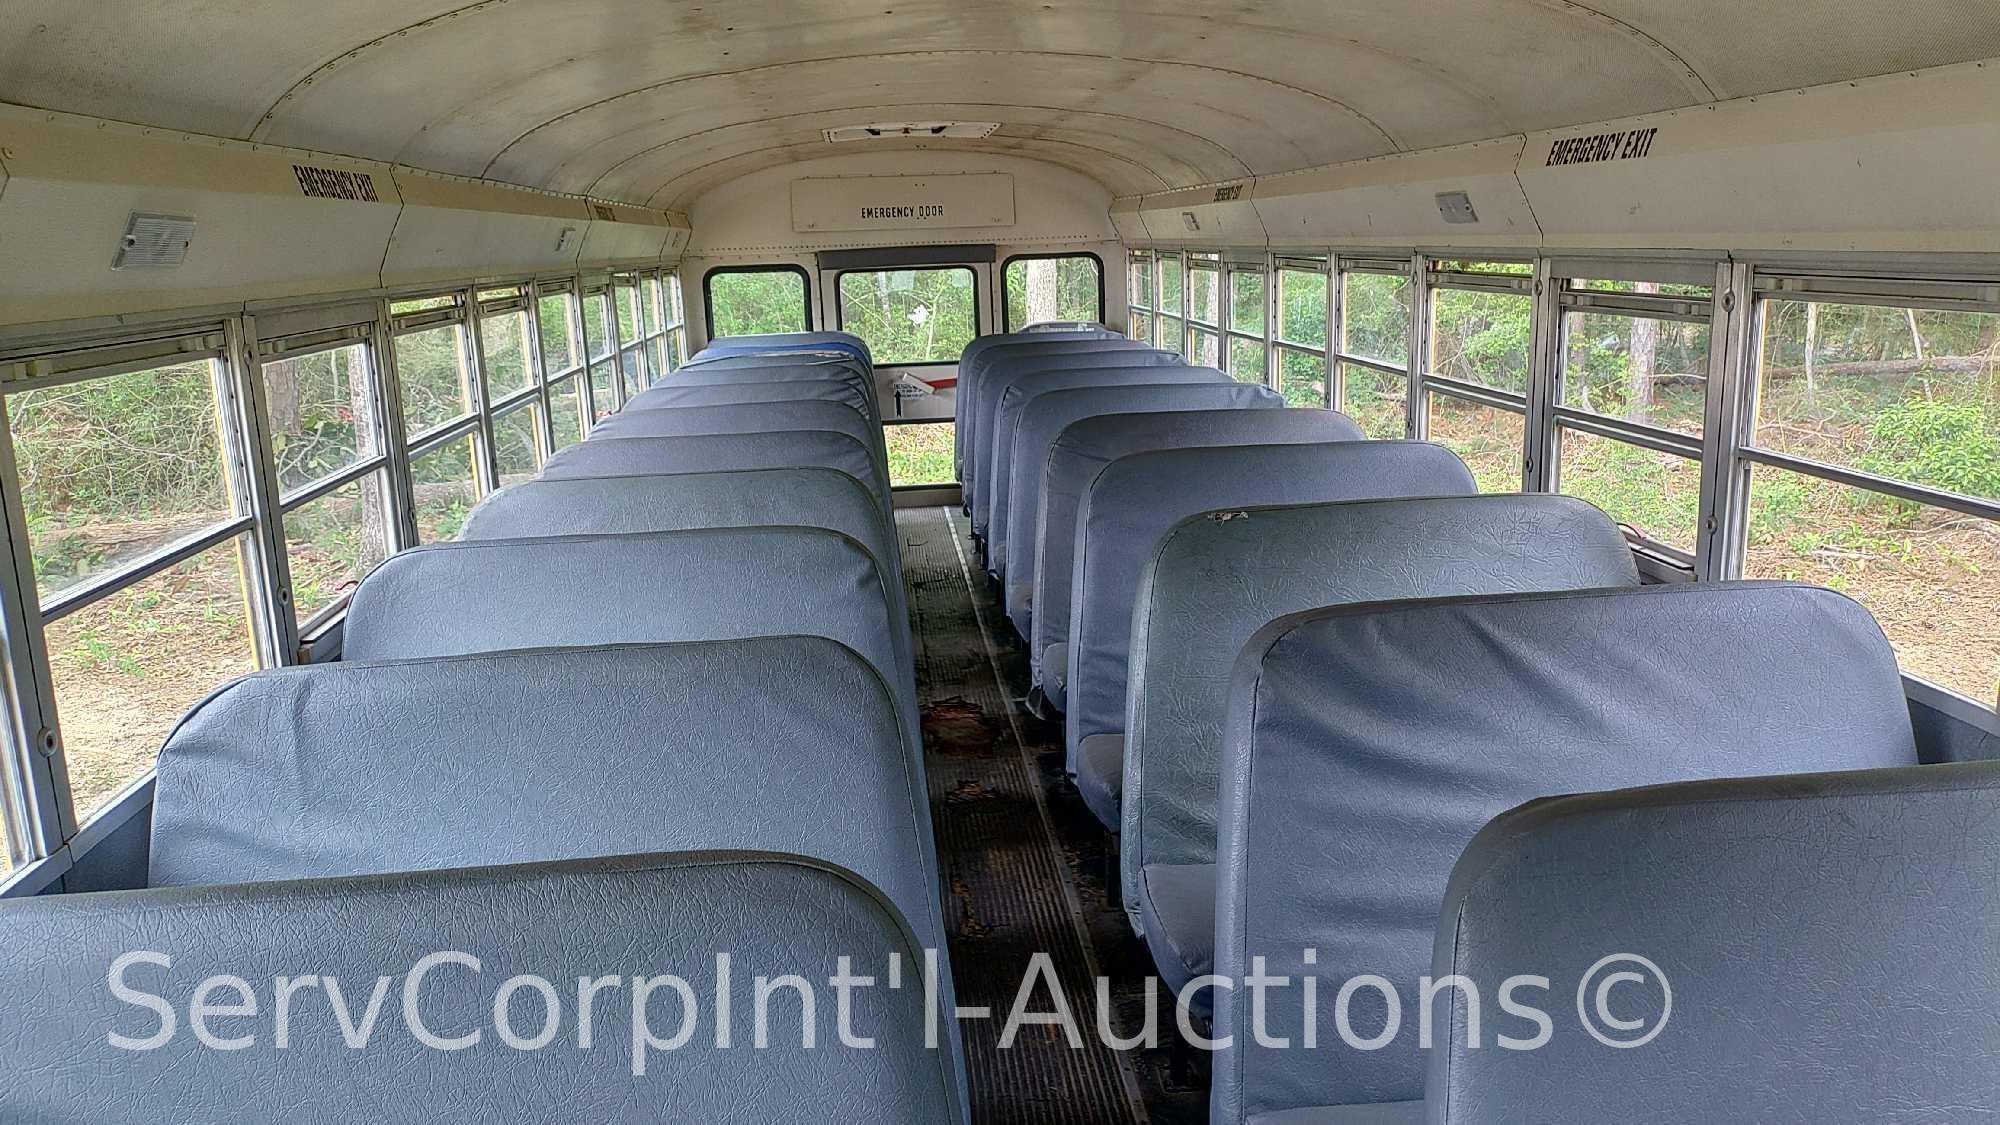 2001 International 3000IC School Bus, VIN # 1HVBRABN41A913167